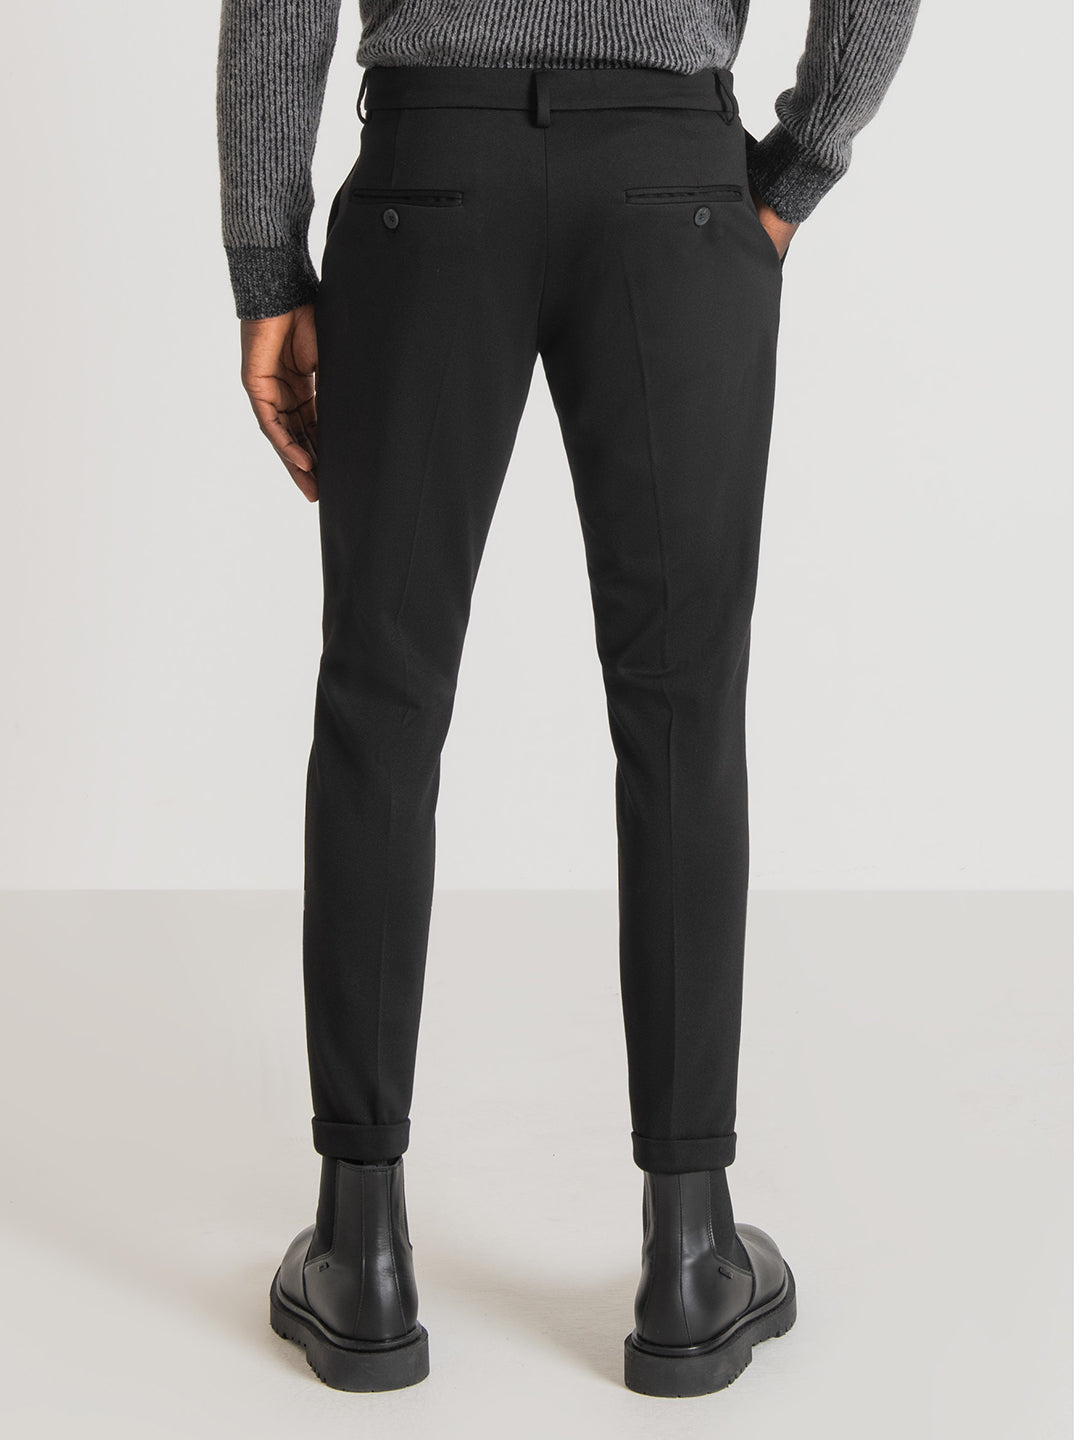 Grey Marl Super Skinny Suit Trousers | New Look